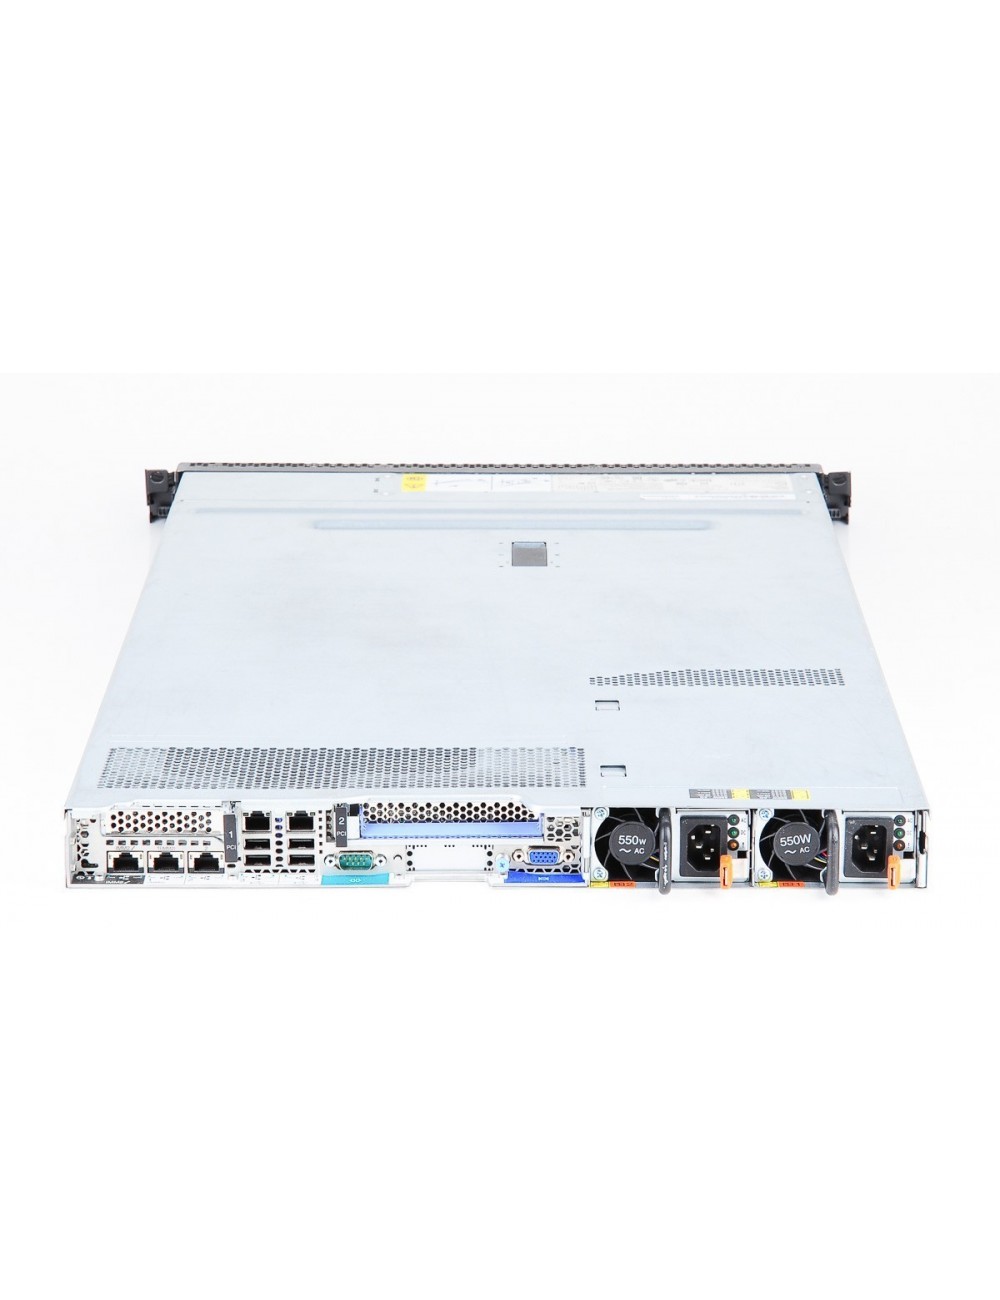 Ibm x3550. Сервер IBM System x3550 m4. IBM x3530 m4 8sff. X3550 m4 motherboard. Дисковая корзина System x3550 m5 4x 2.5in HS HDD Kit.